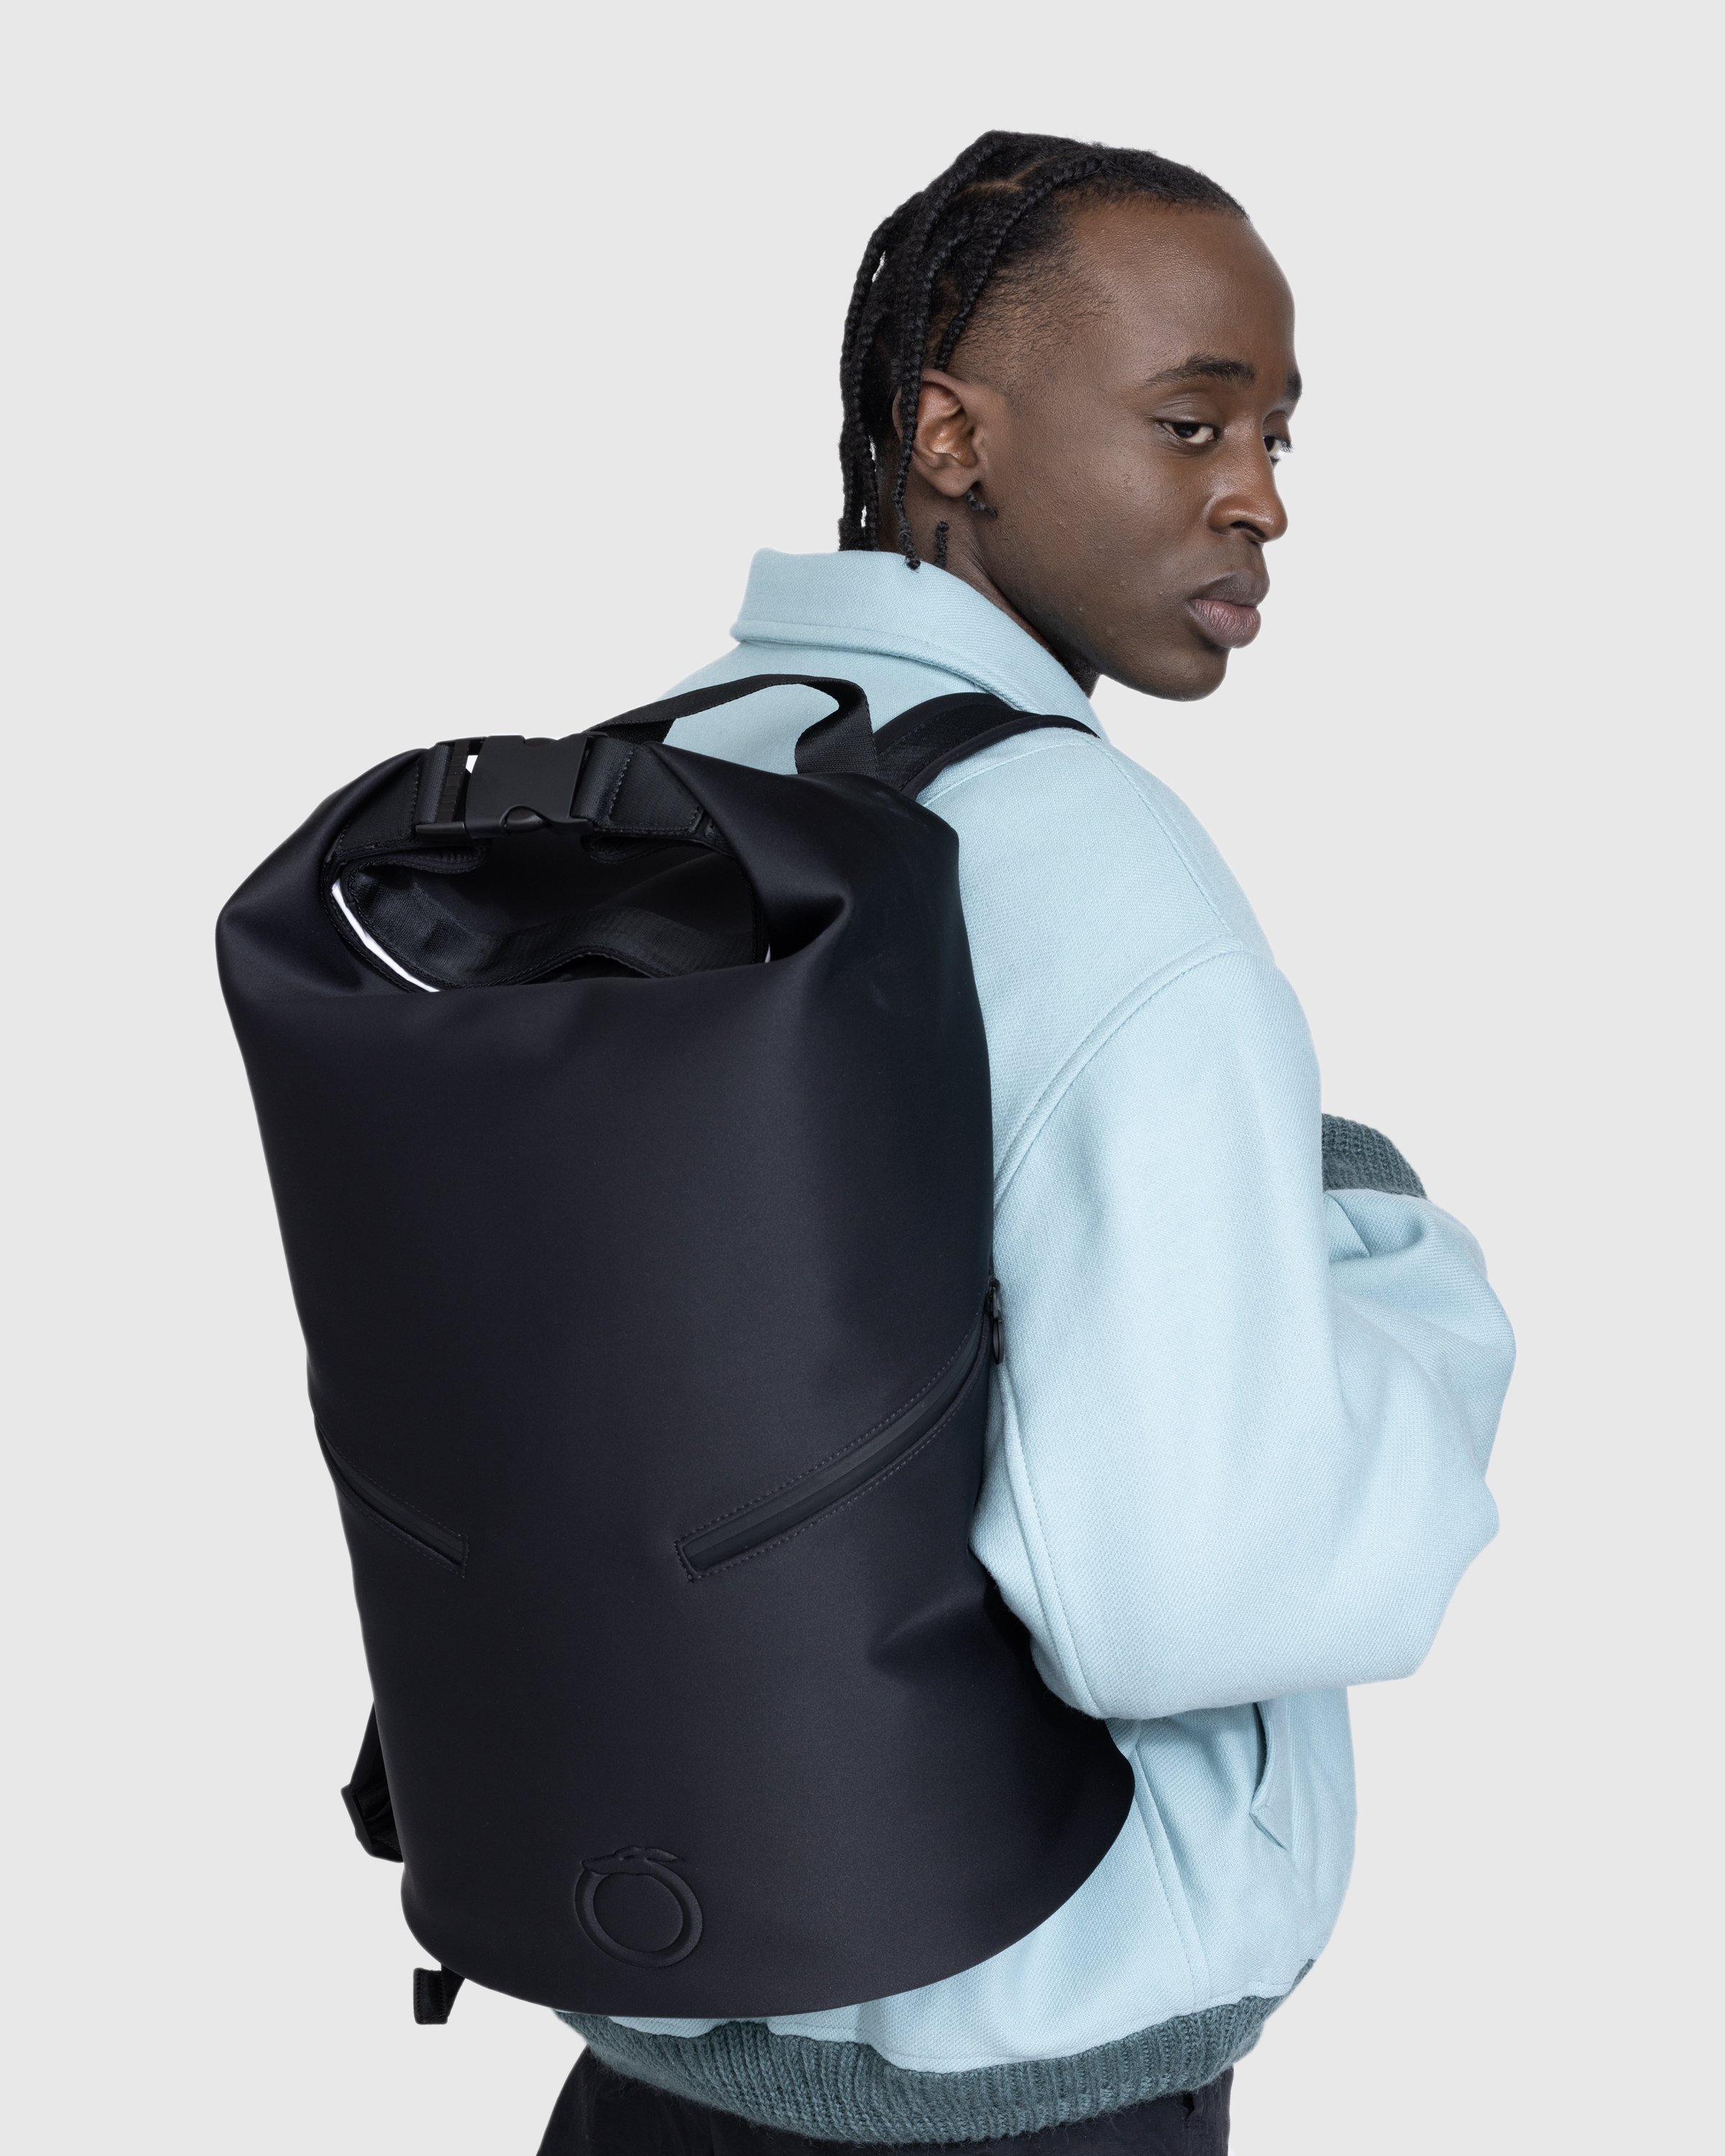 Trussardi - Syla Neoprene Backpack Black - Lifestyle - Black - Image 5